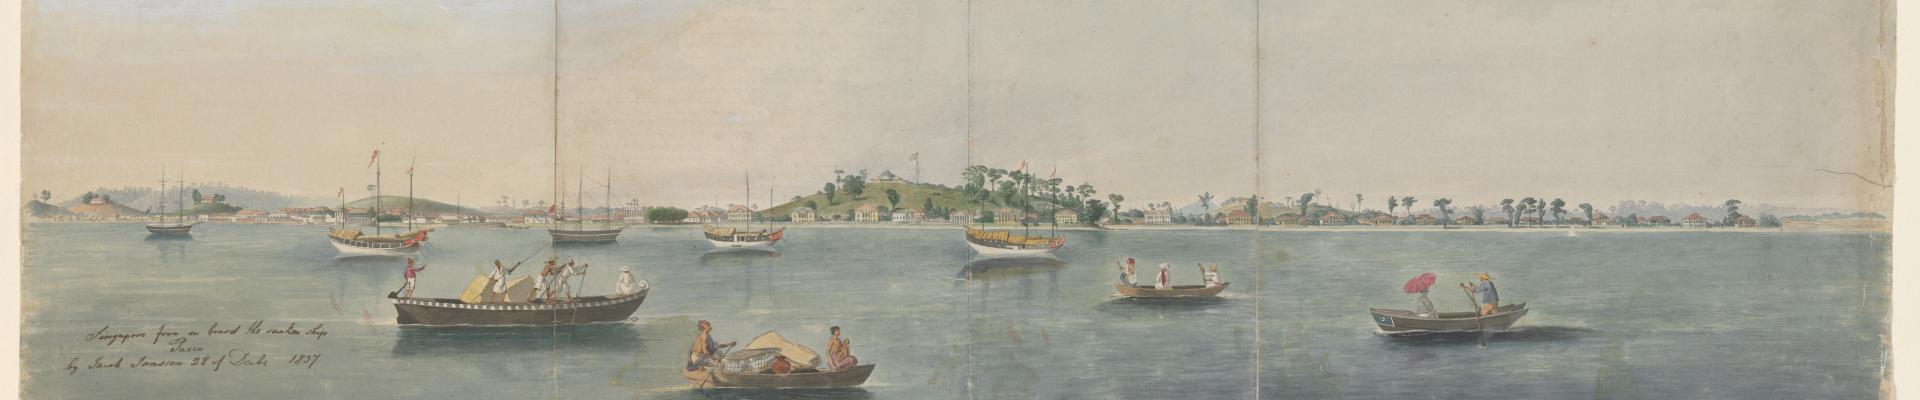 Jacob Janssen Singapore from on board the sunken ship Pasco, December 28, 1837, watercolour (detail)